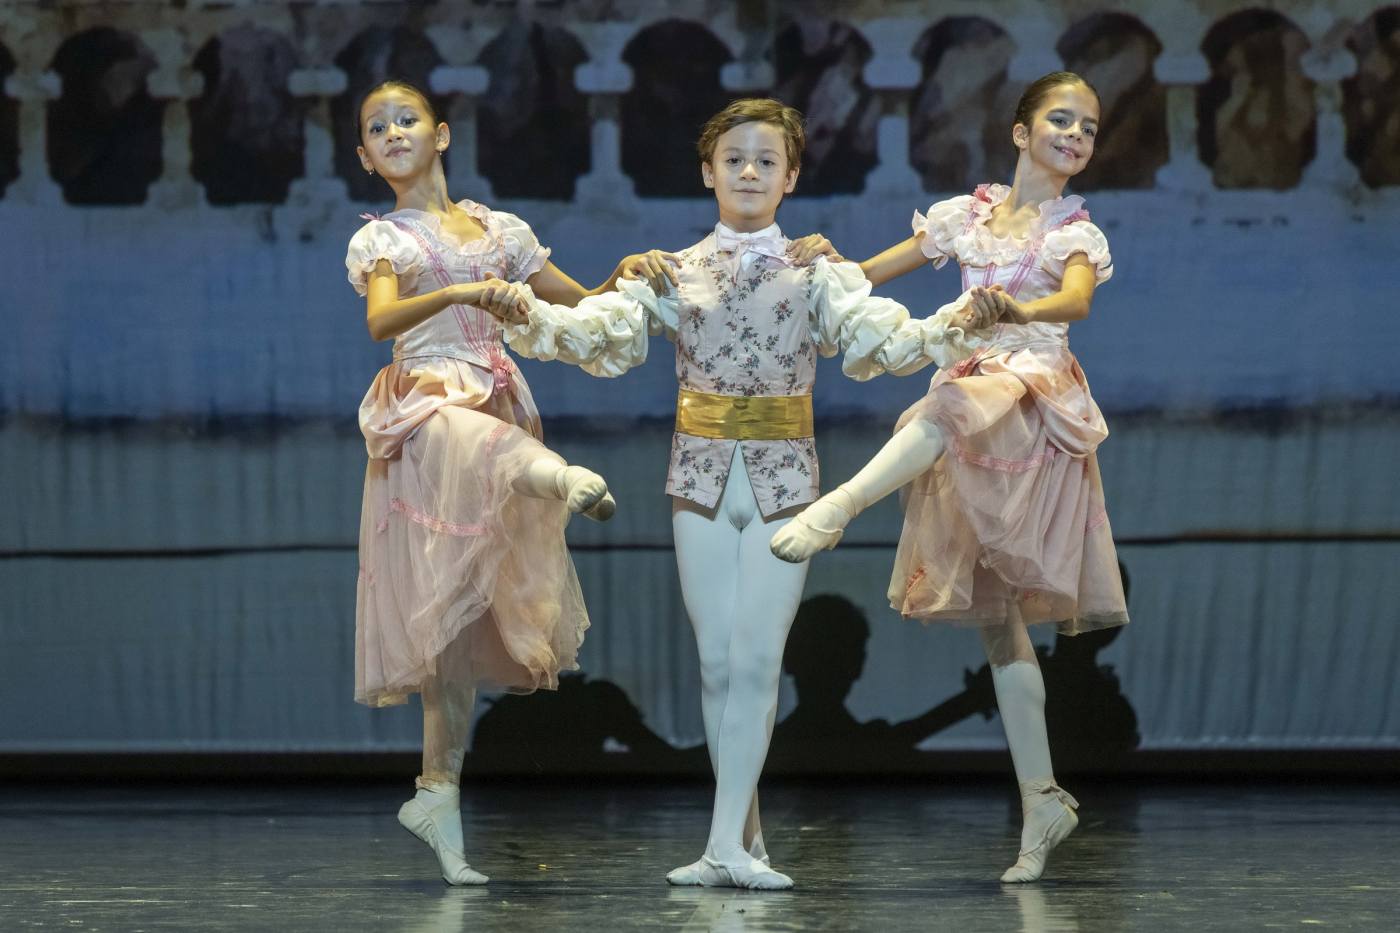  1. F.Y.Bonecz, L.Márton Kiss, and L.Berki, “Little Swan Lake” by D.Radina et al., Hungarian National Ballet Institute & Hungarian National Ballet 2023 © P.Rákossy / Hungarian State Opera 